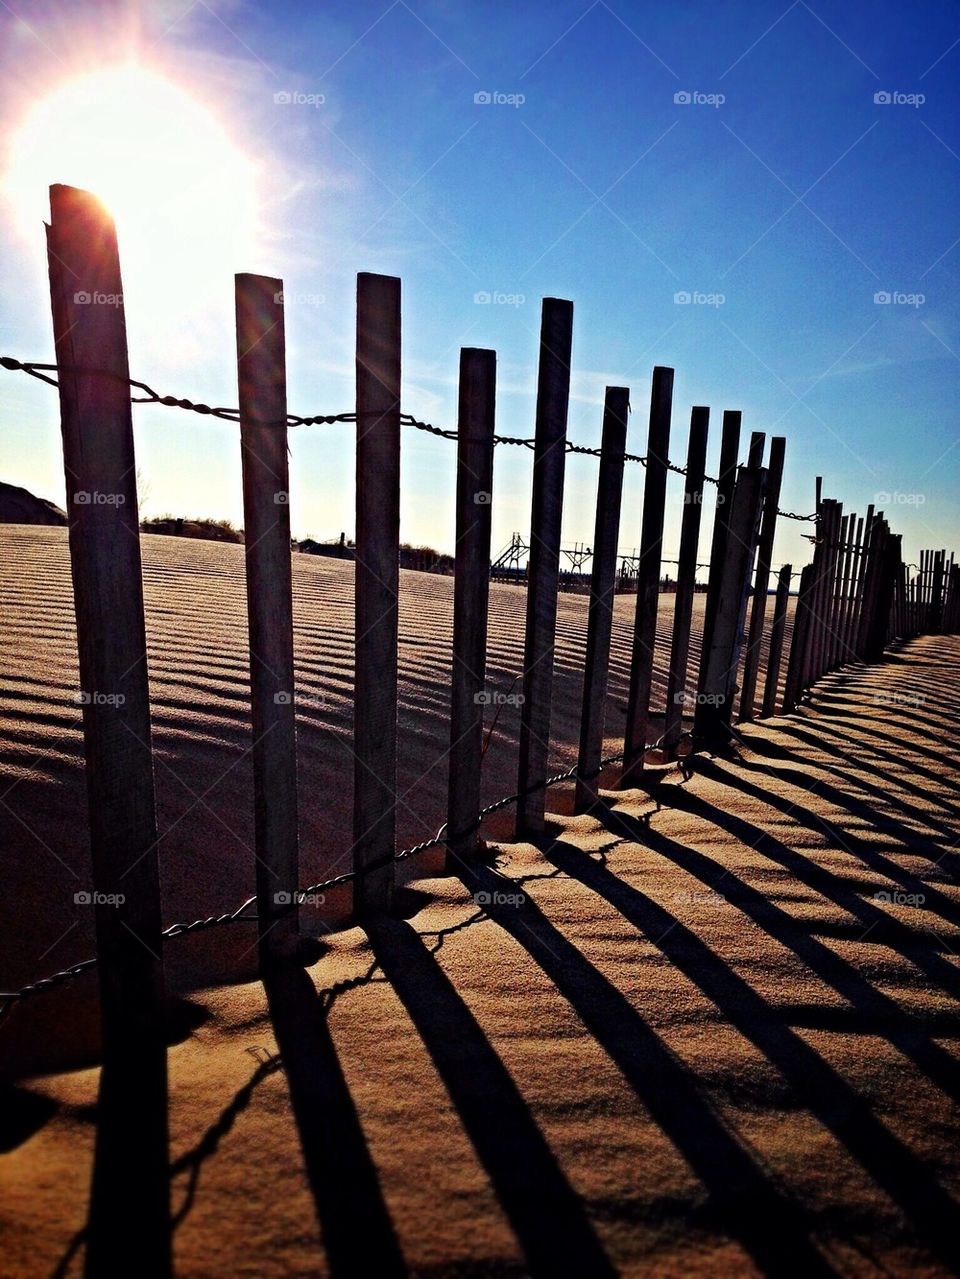 Sandscape and fences